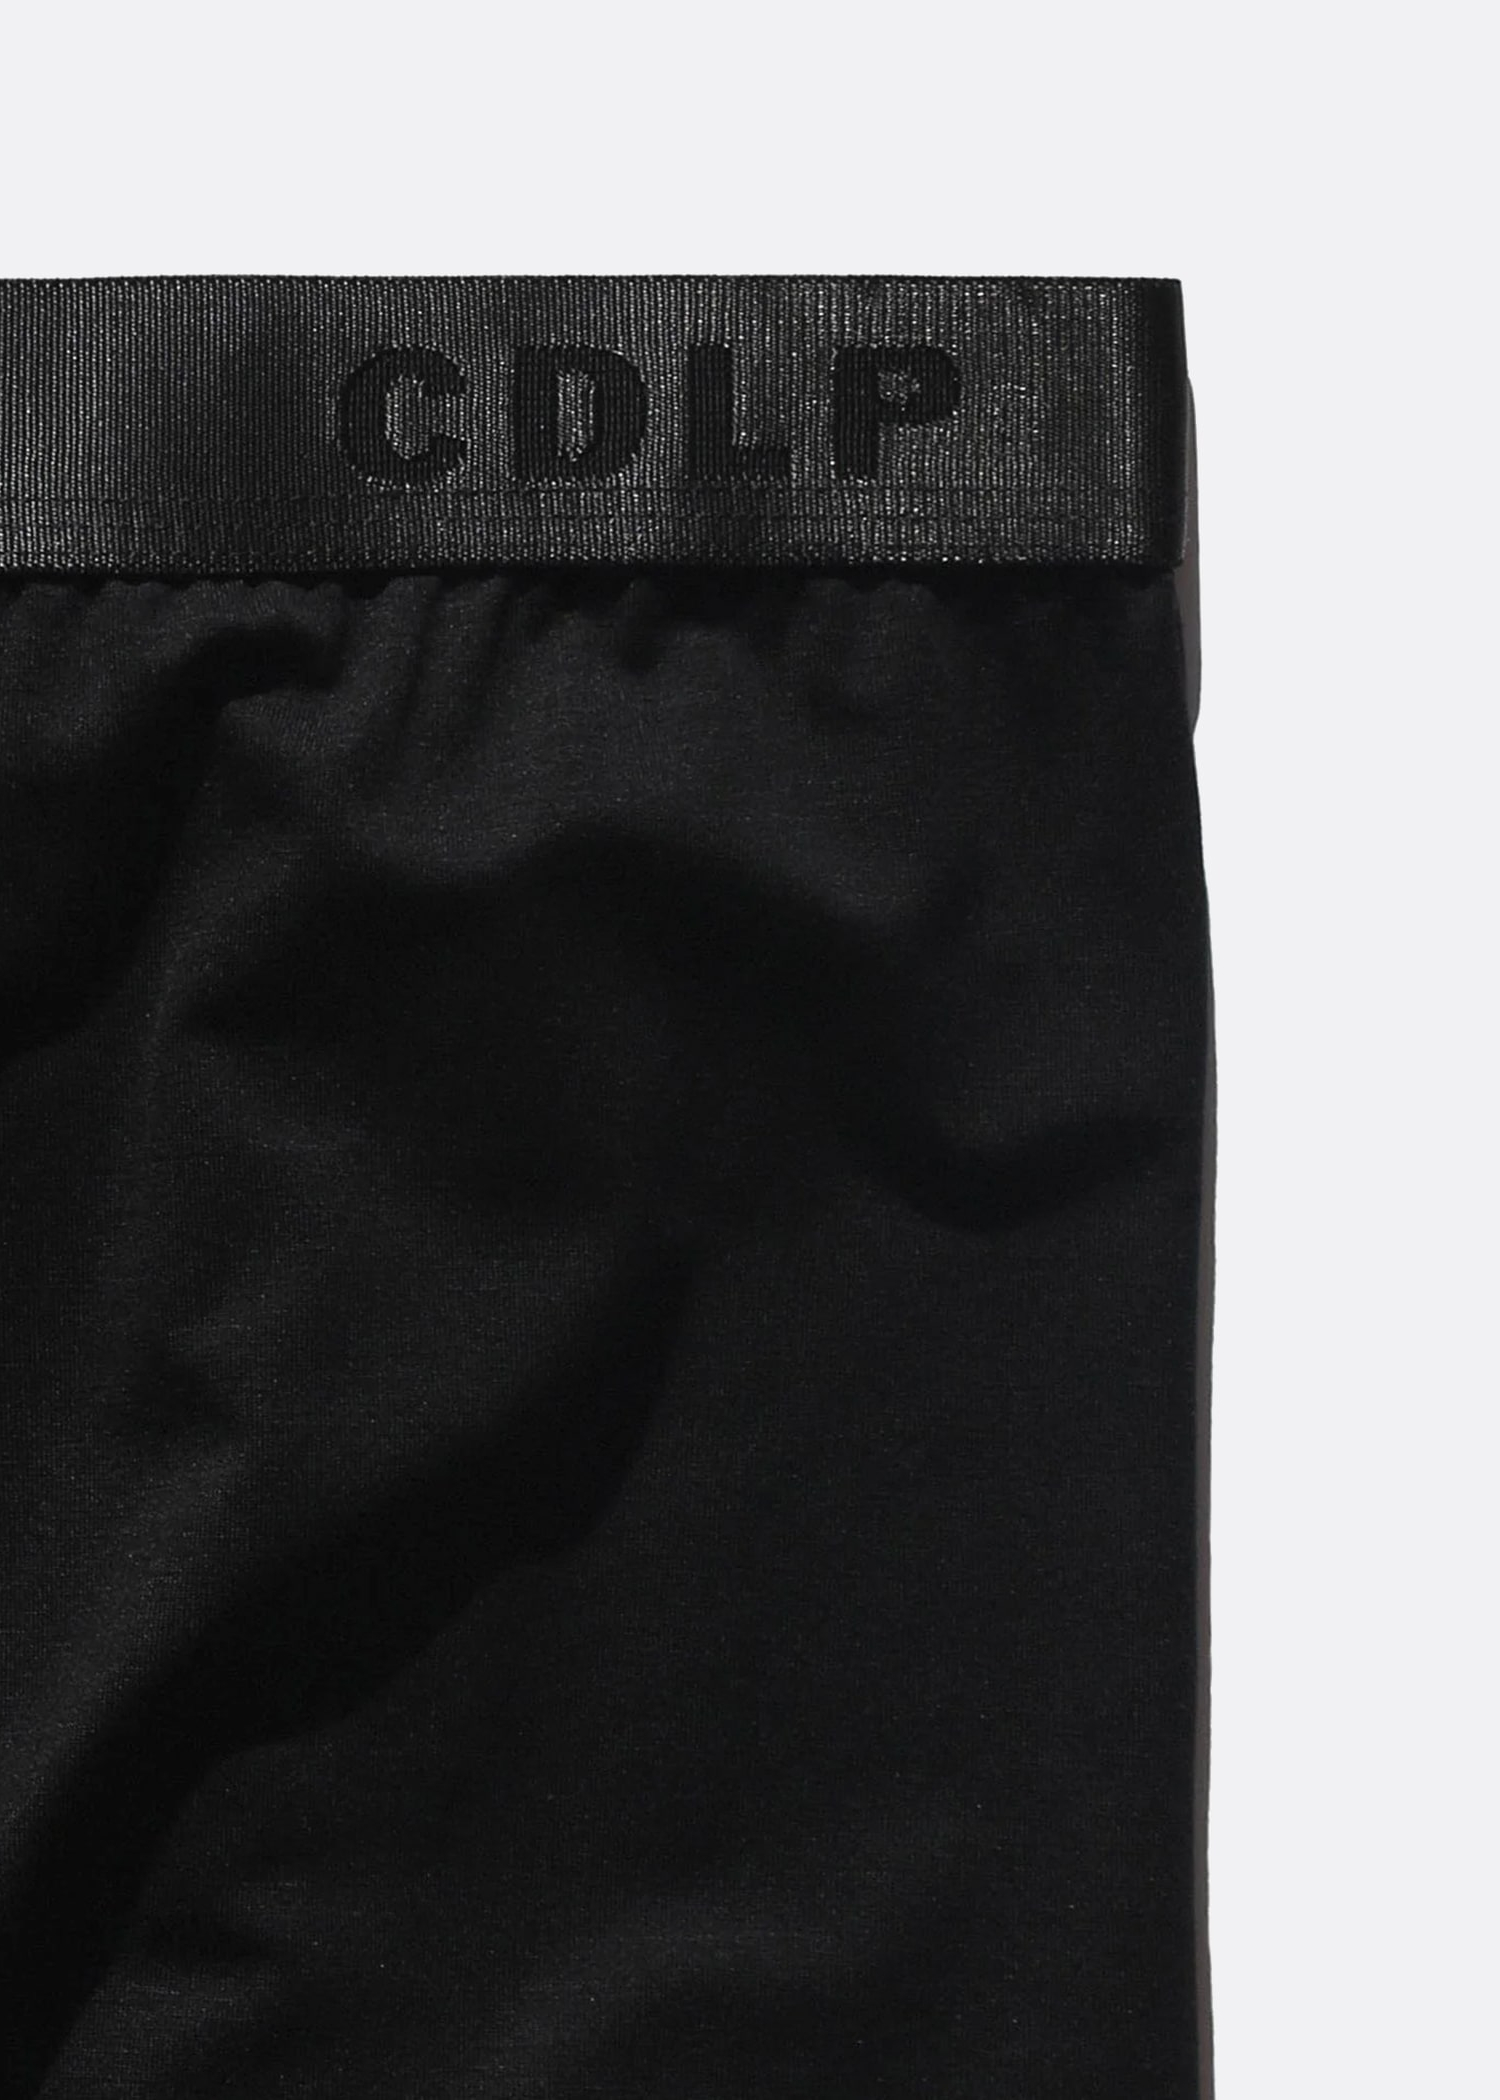 CDLP Black Boxer Trunks Set x 3 Pair